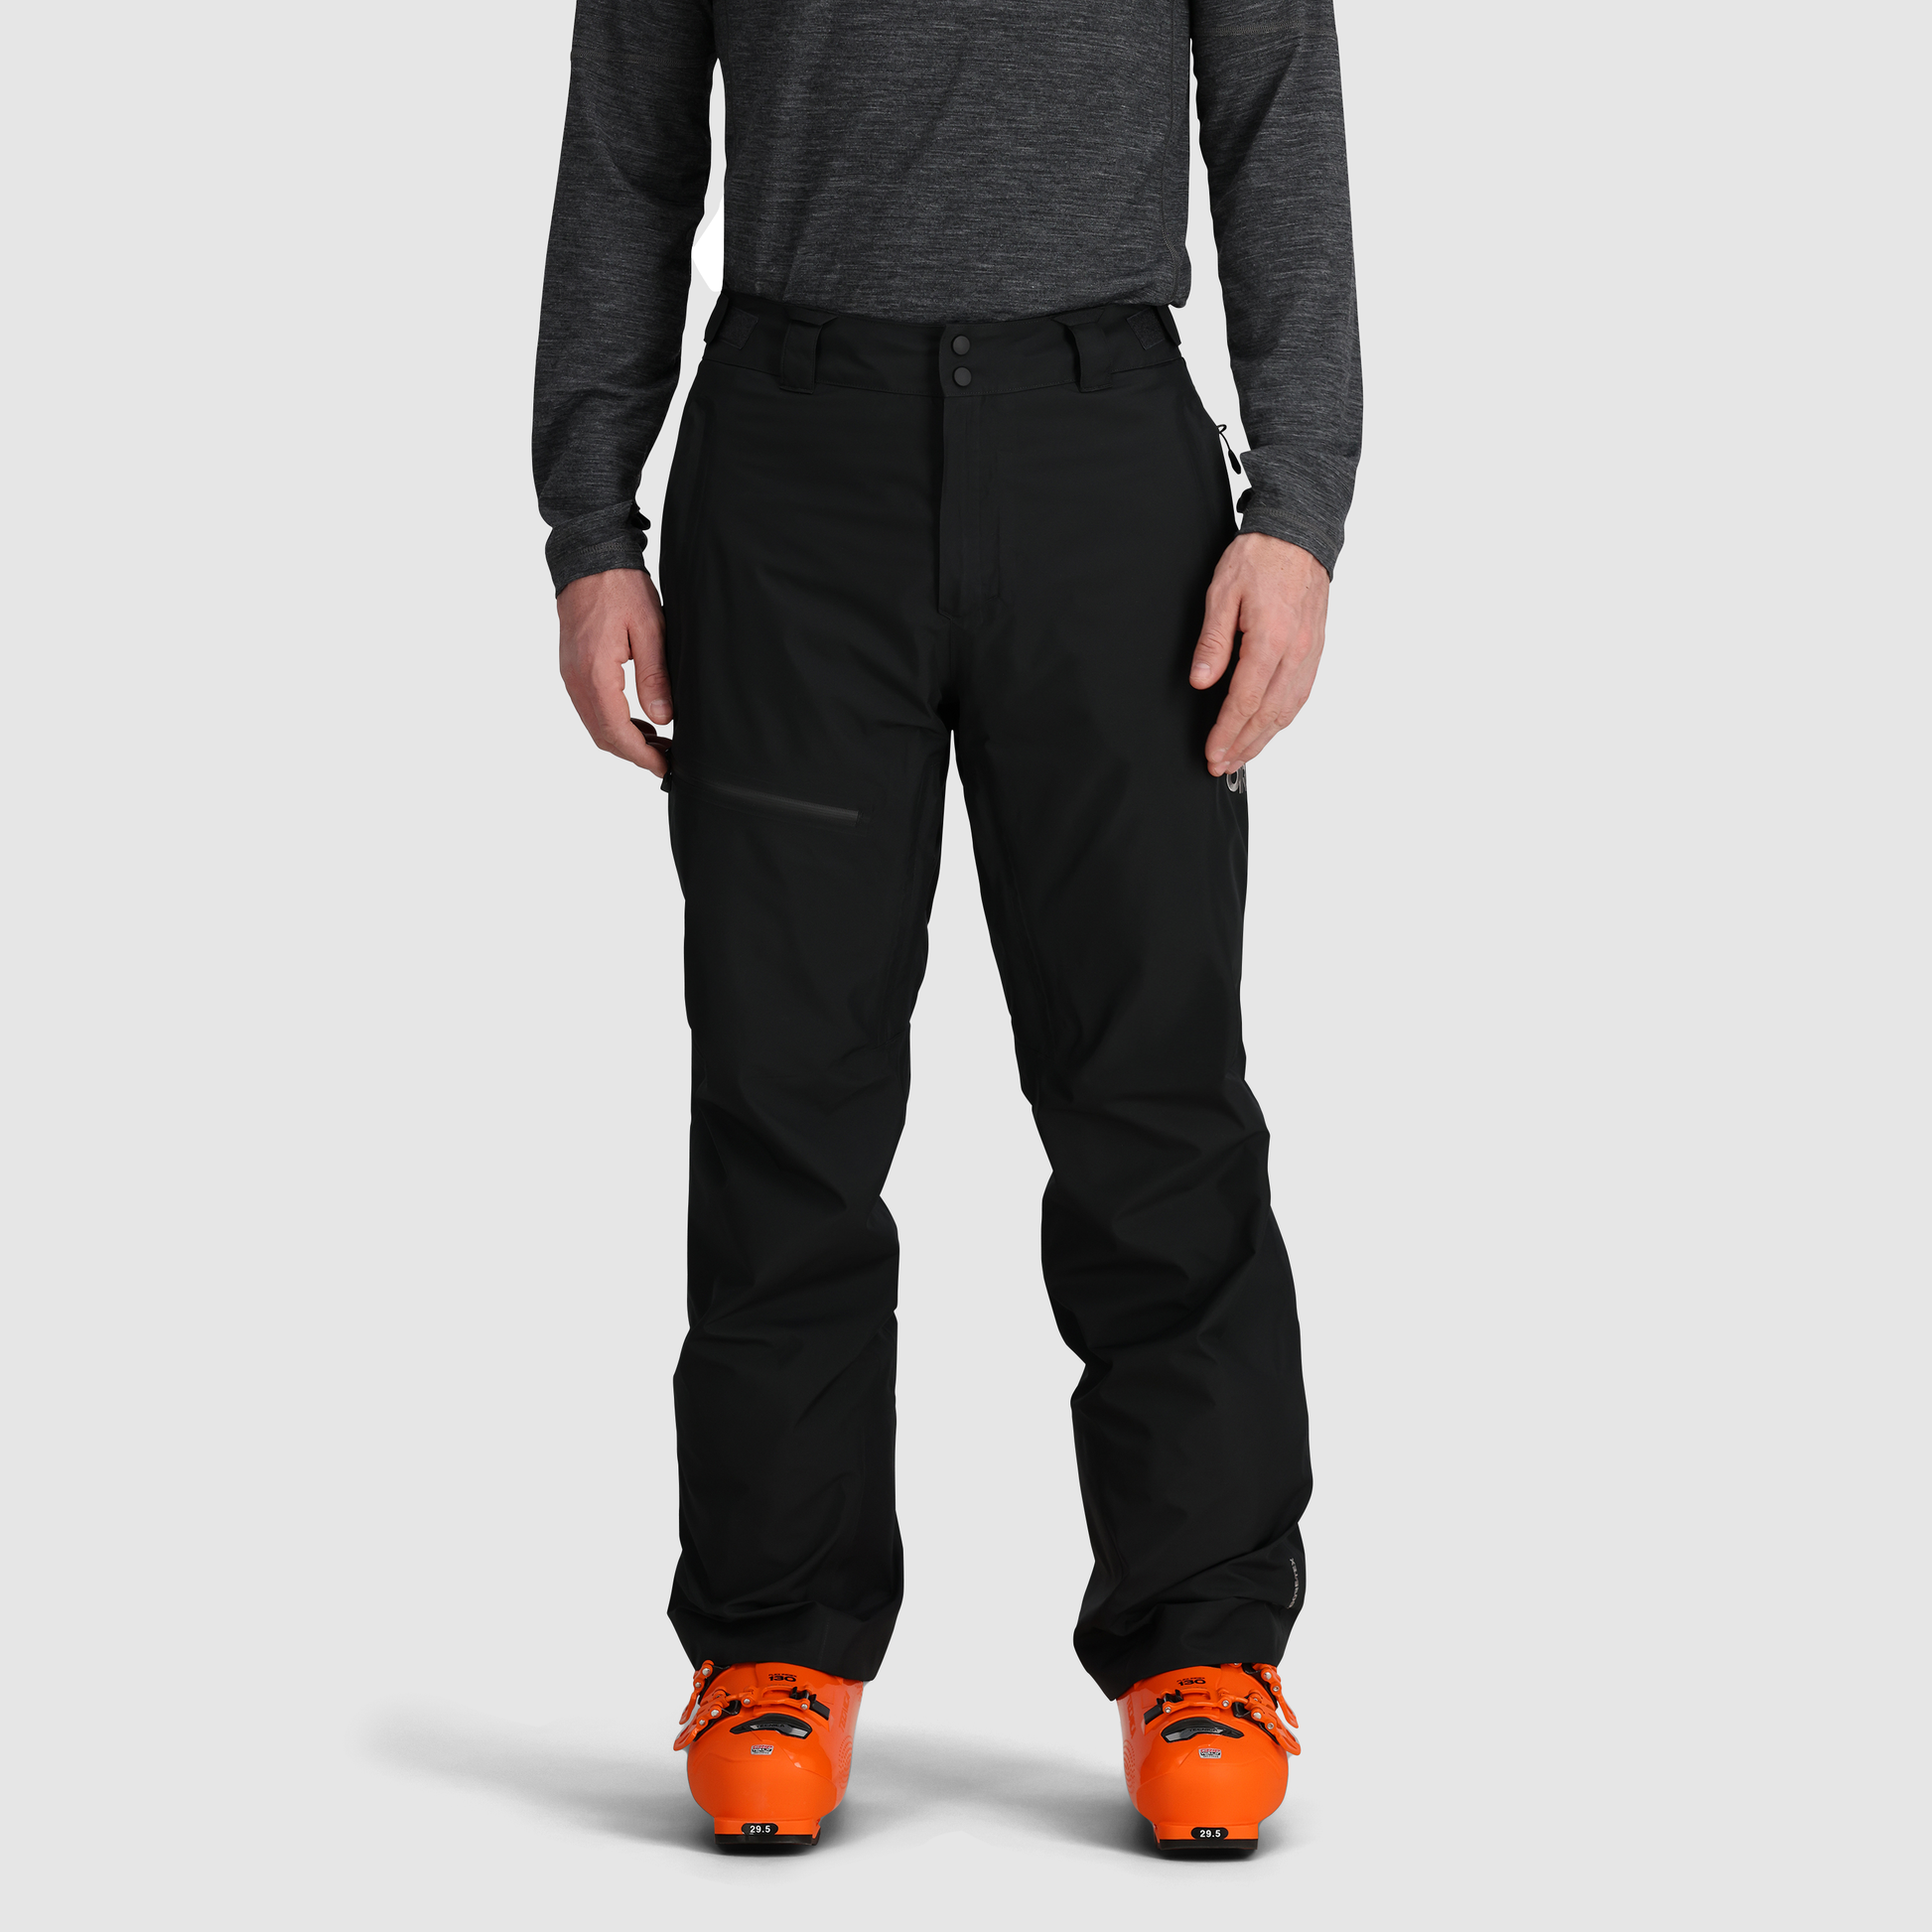 Avalanche black cargo leggings size M